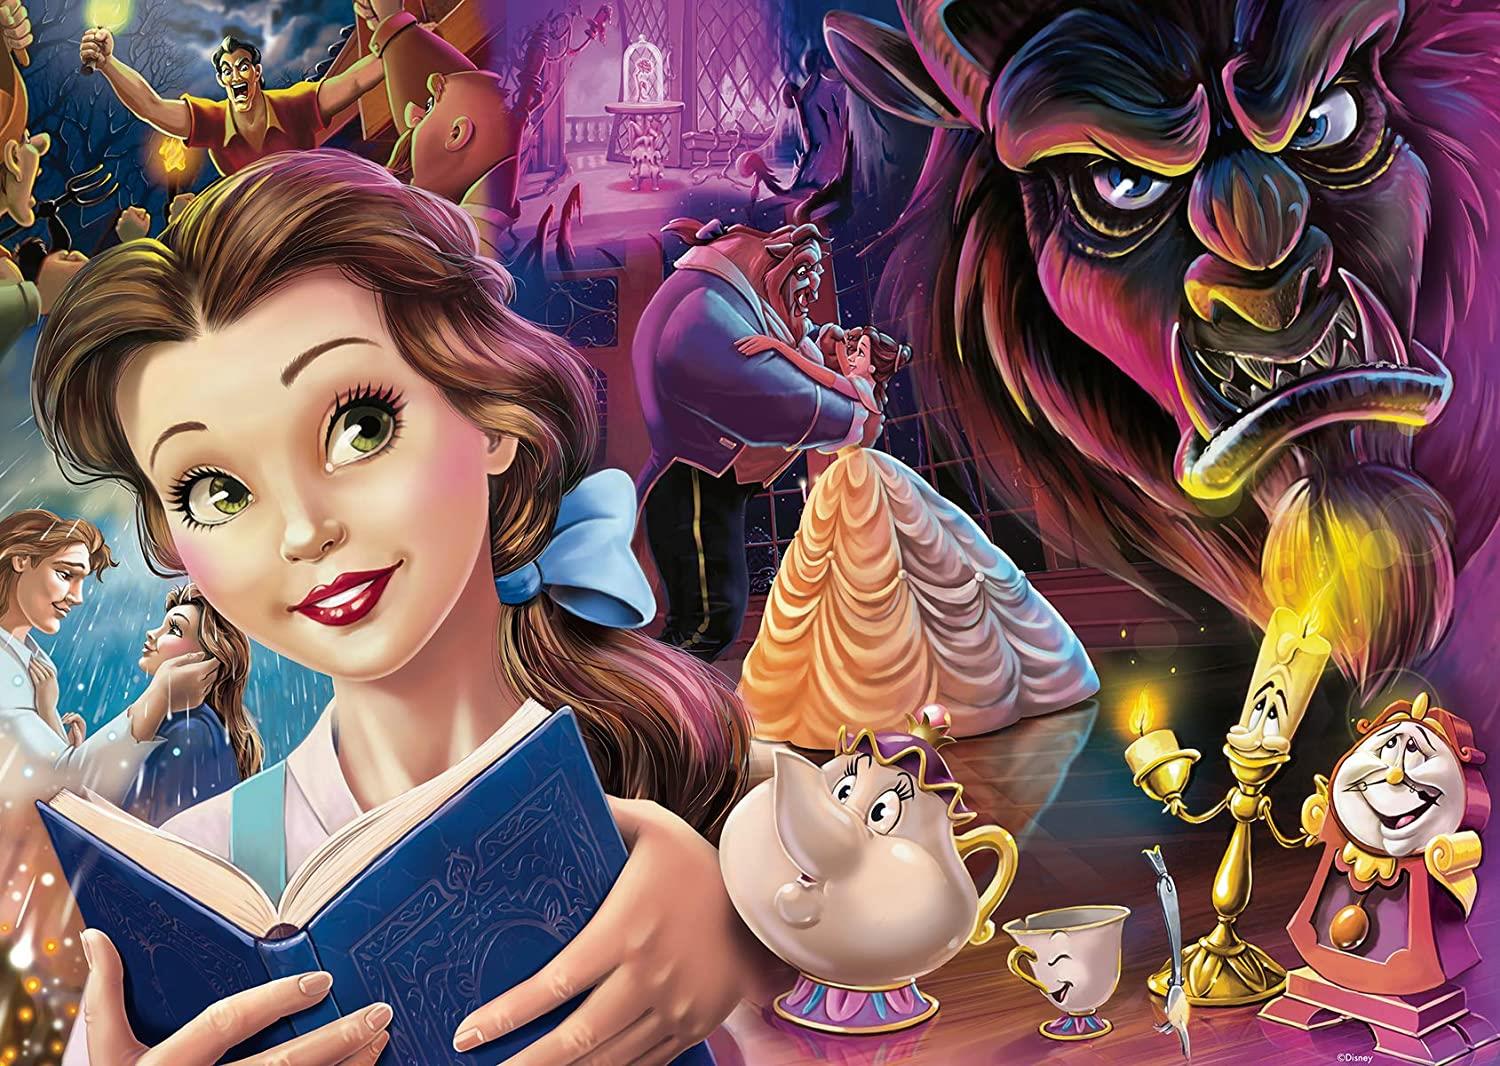 Ravensburger Disney Princess Heroines No.2 Beauty & The Beast Jigsaw Puzzle (1000 Pieces)